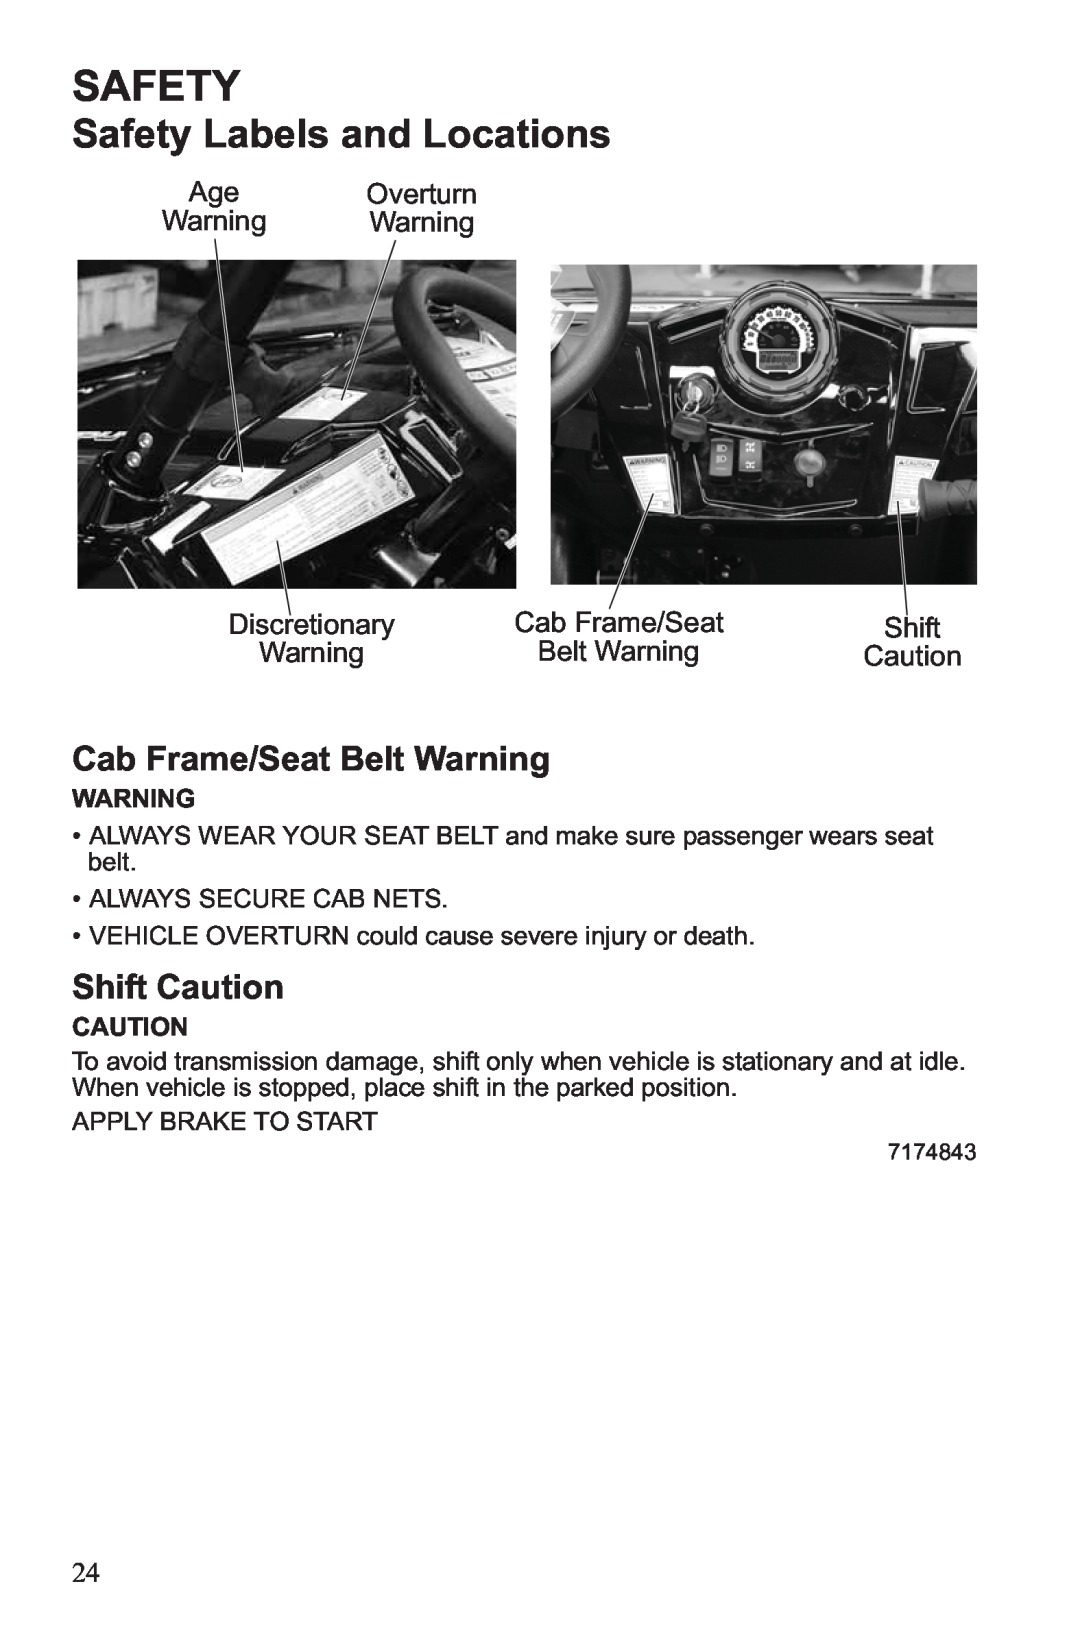 Polaris RZR XP 4 900 Safety, Cab Frame/Seat Belt Warning, Shift Caution, Age Overturn Warning Warning, Discretionary 